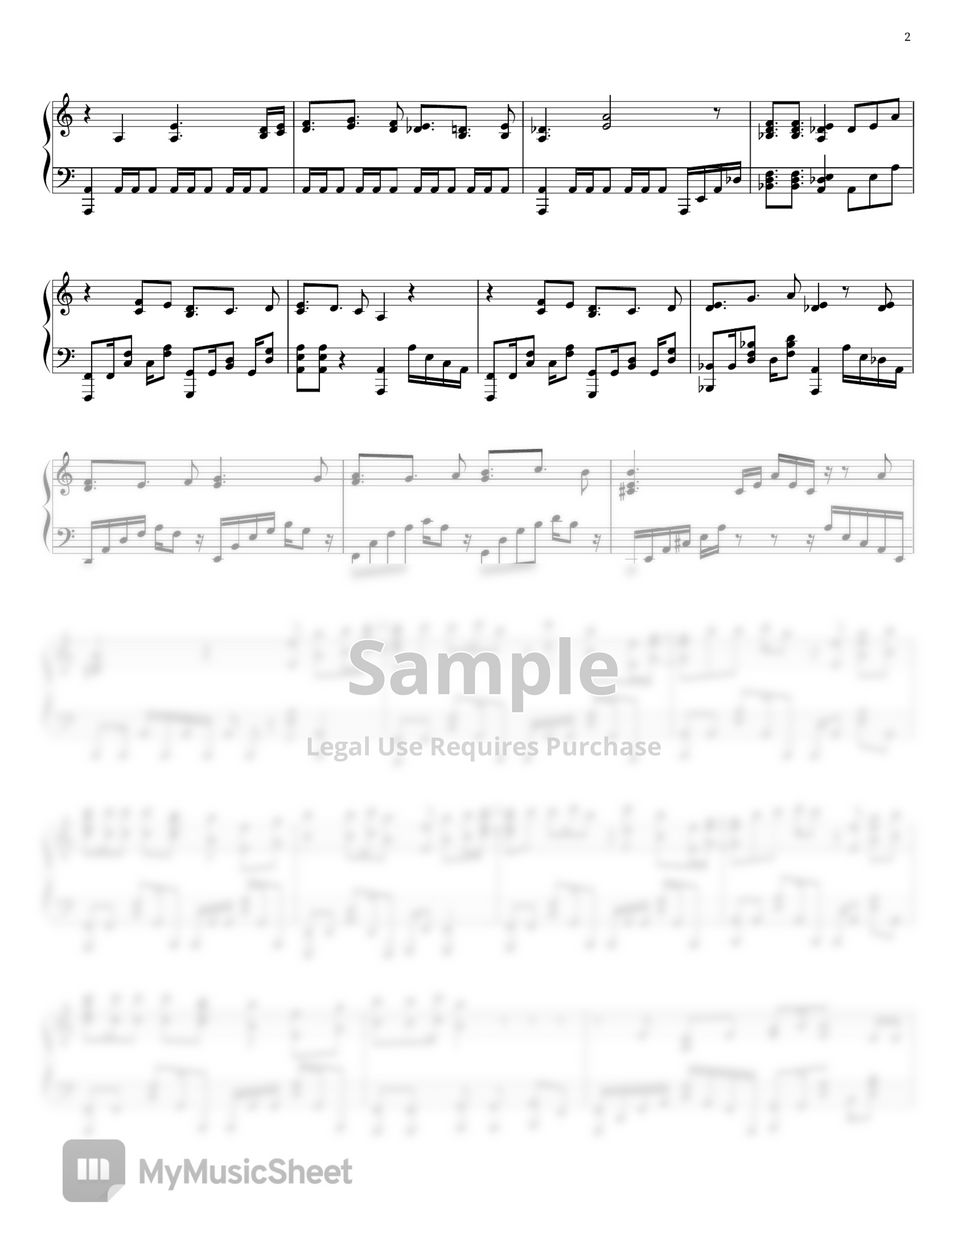 Gawr Gura - REFLECT by Caazi Piano Sheets